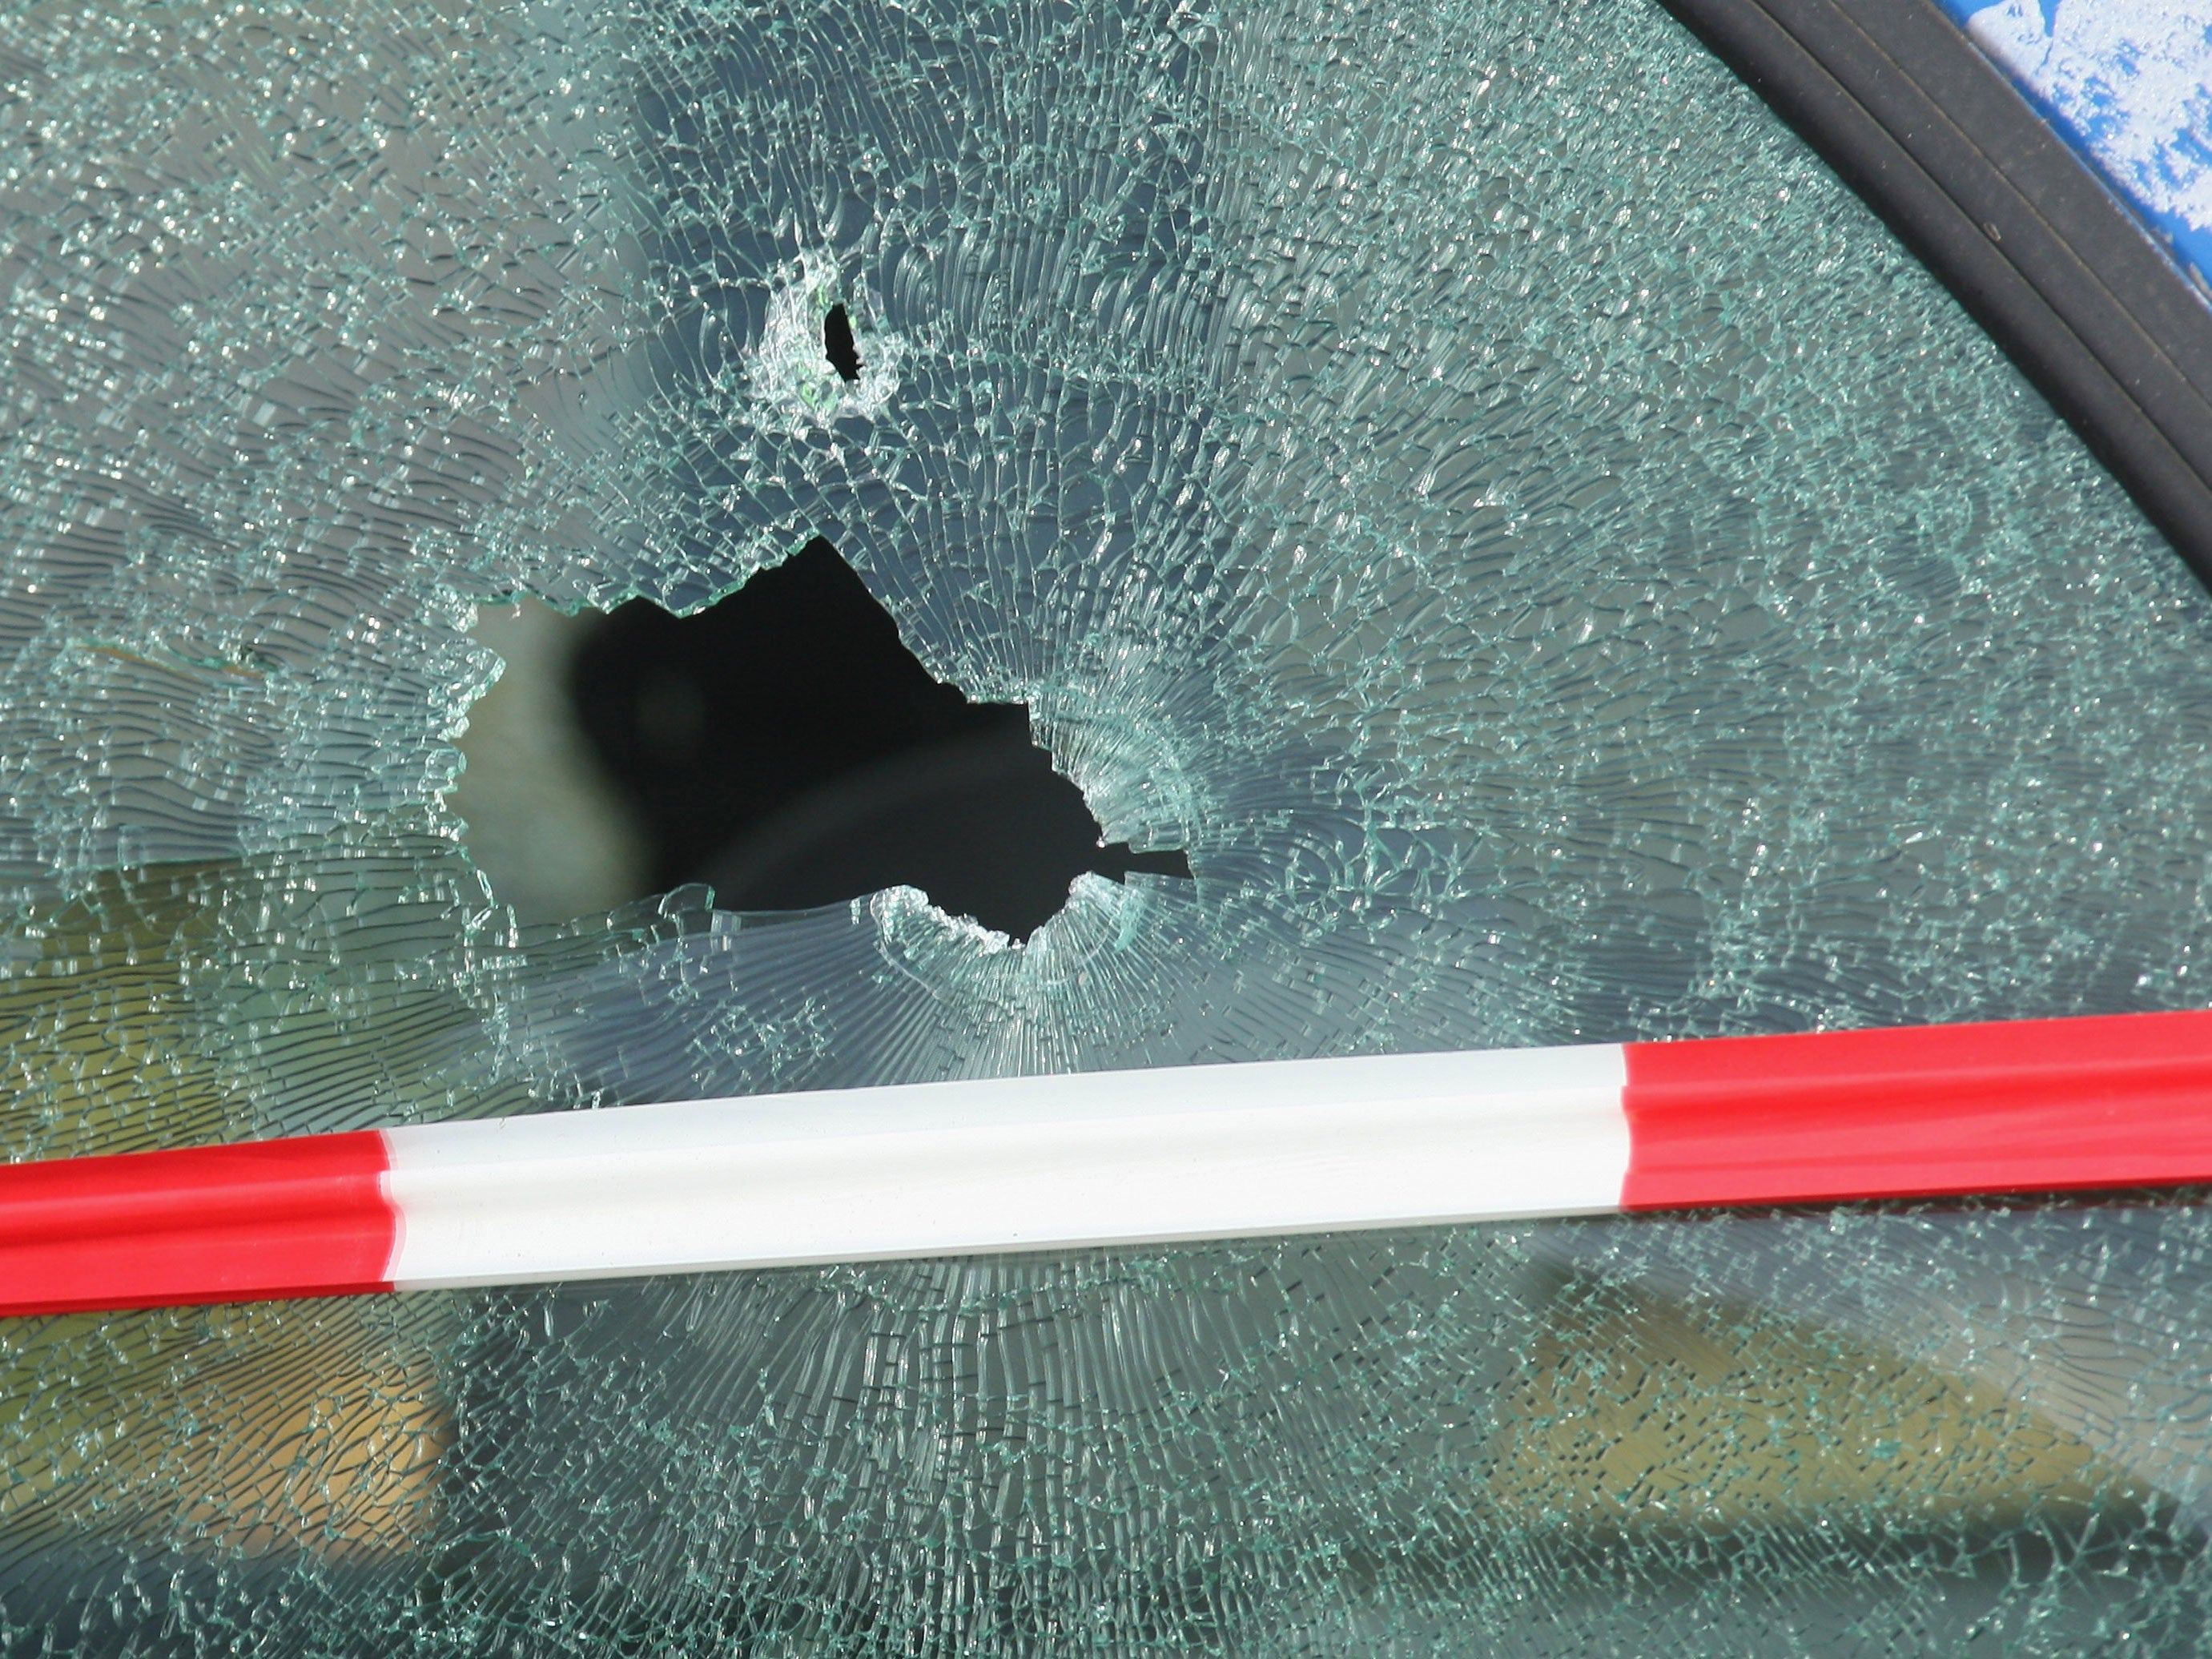 The officer shot Bolinger through her car window